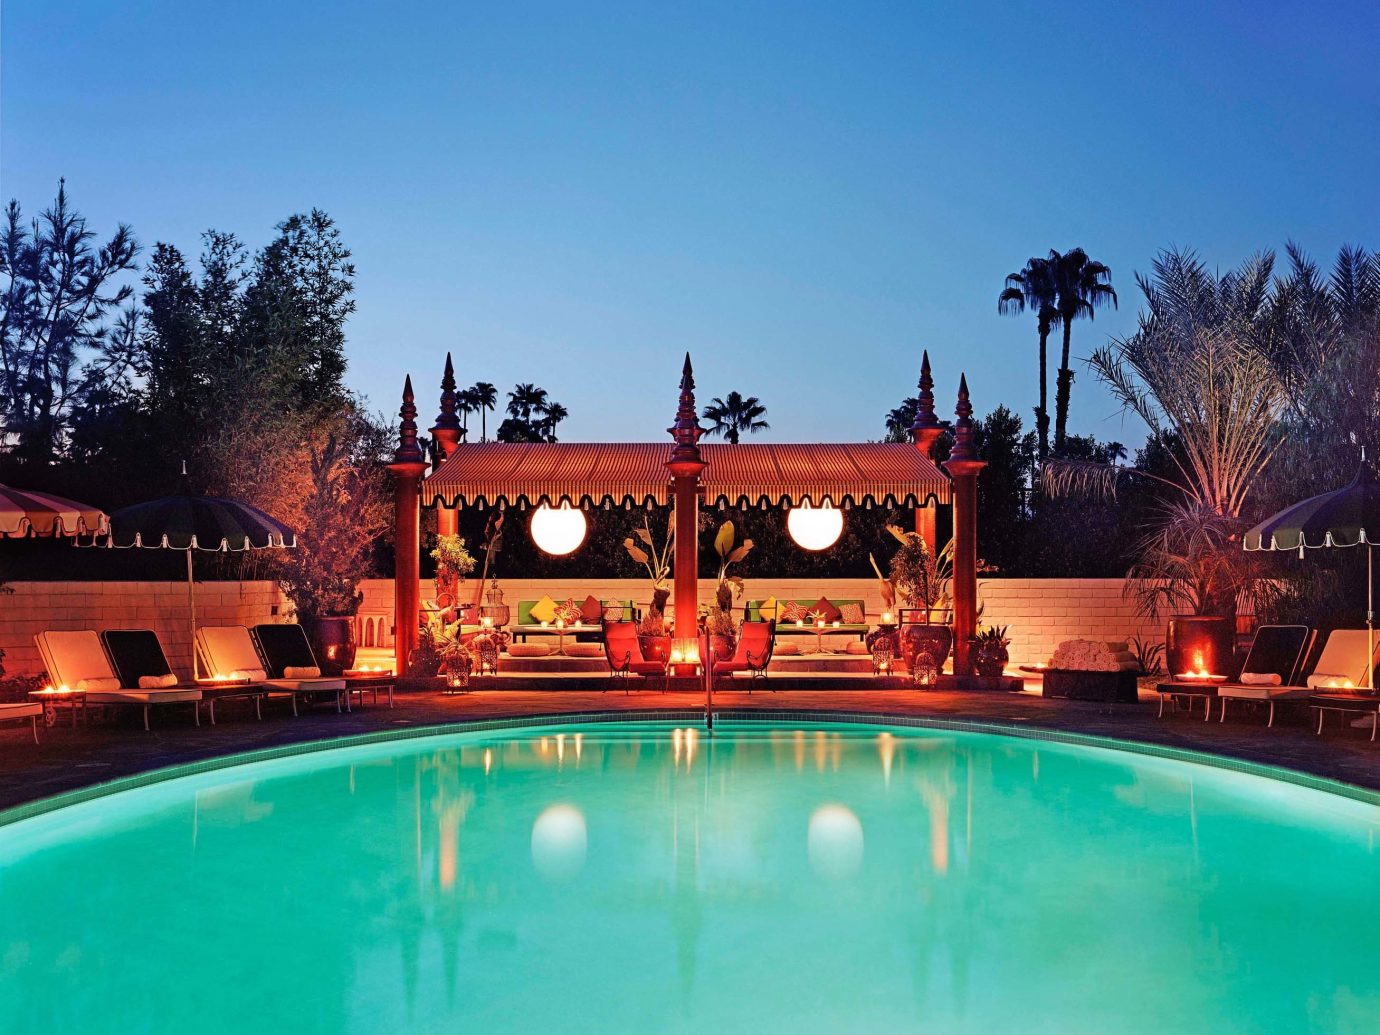 Hotels Pool Romance sky outdoor water swimming pool property building leisure estate Resort mansion Villa hacienda palace blue